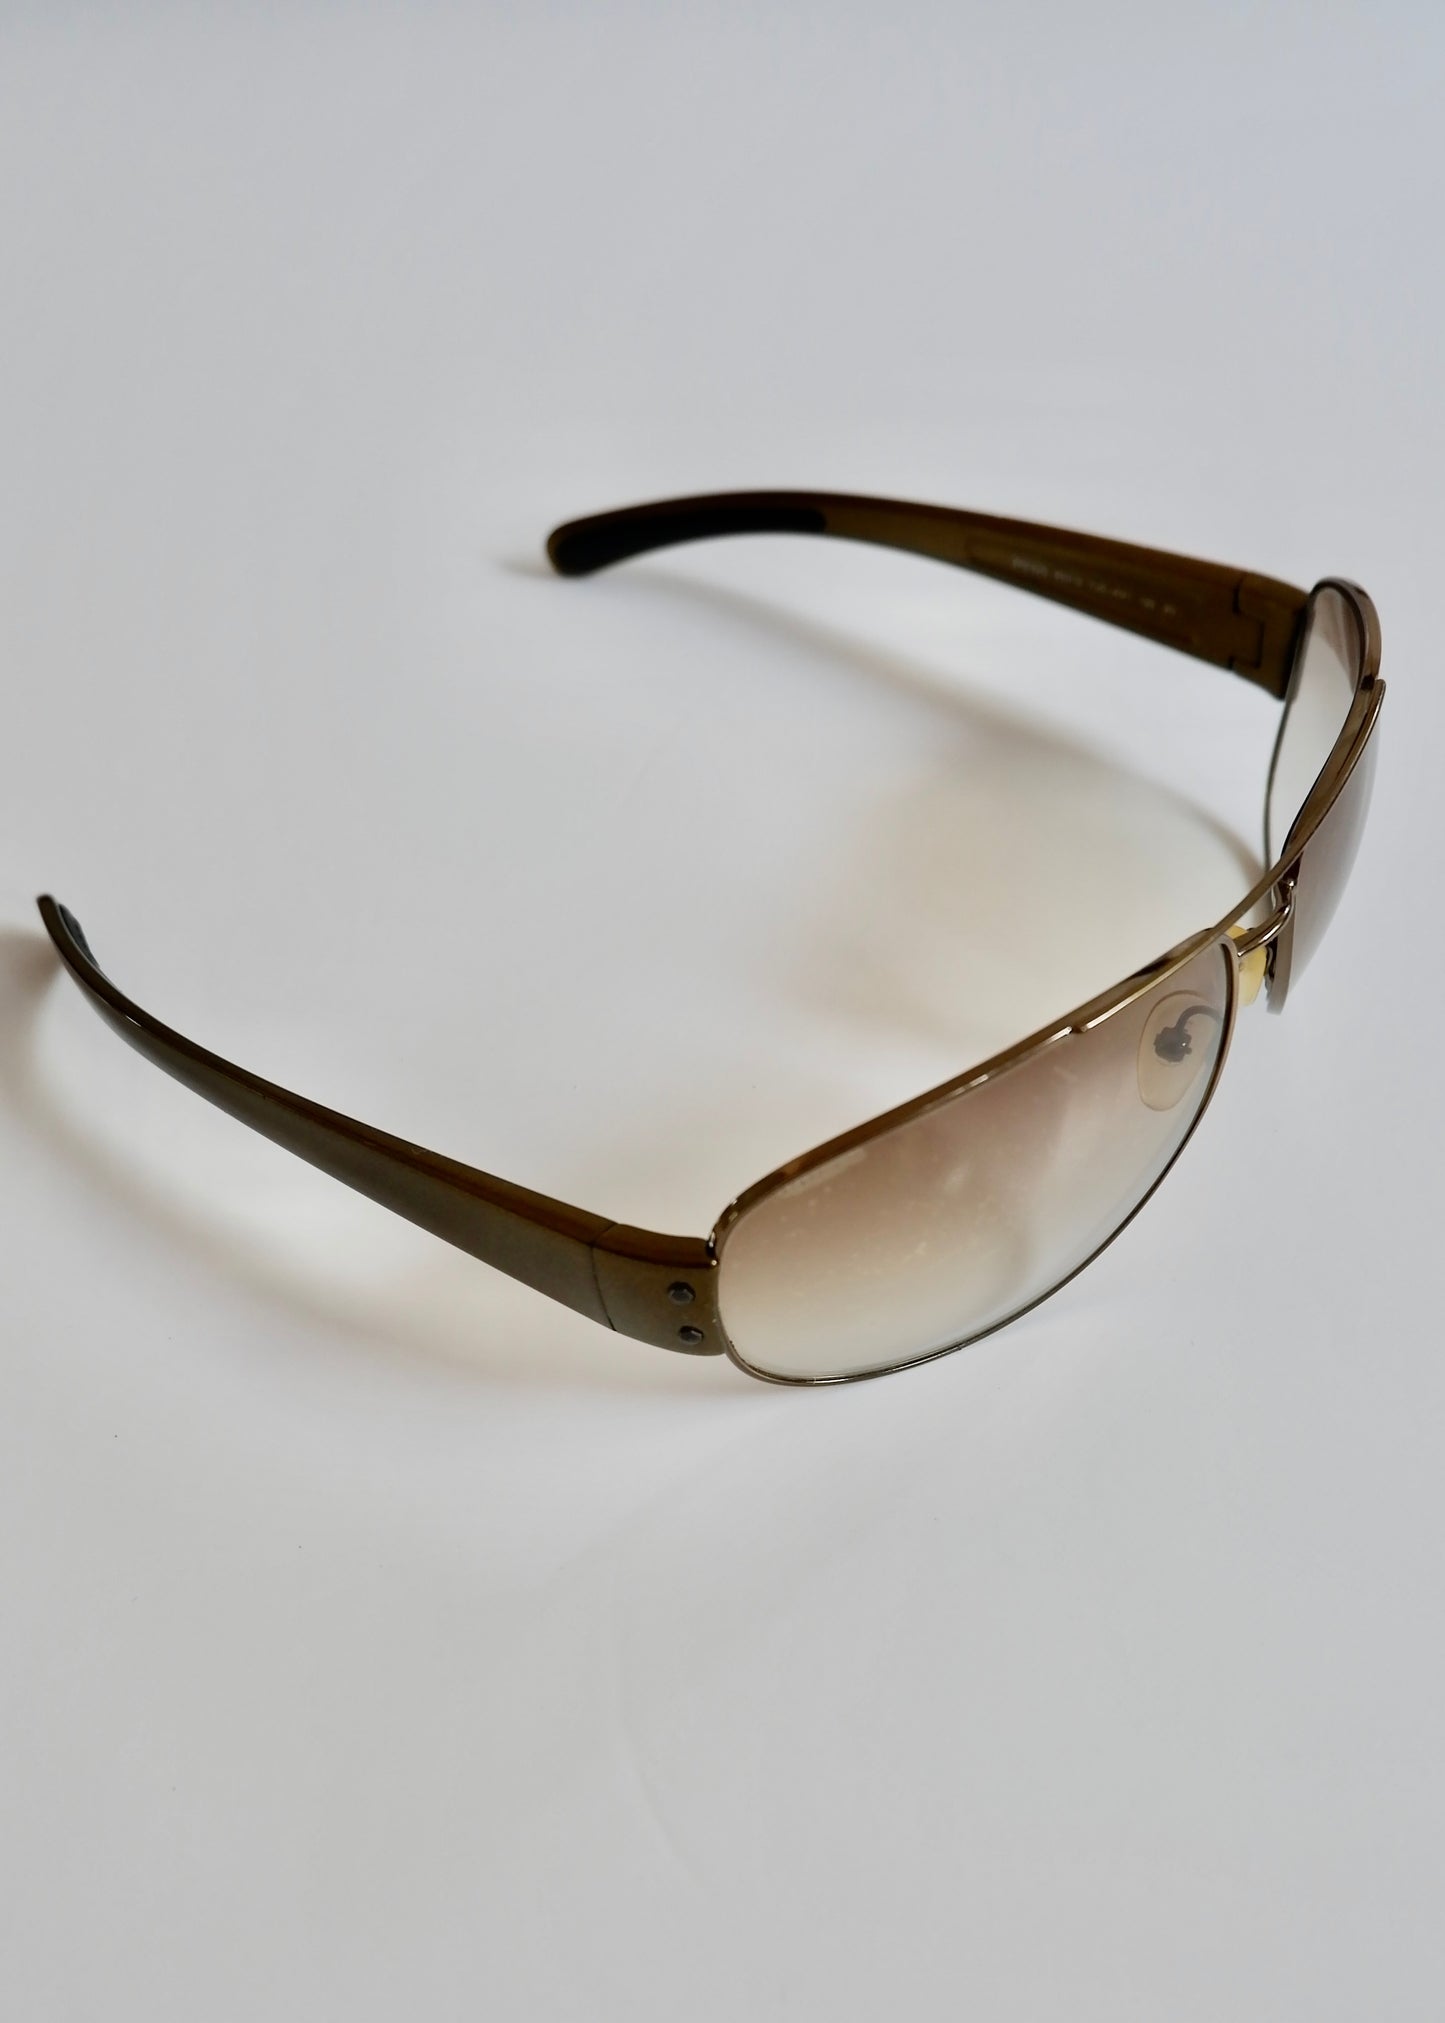 Authentic Preowned Prada Brown Metal Frame Sunglasses